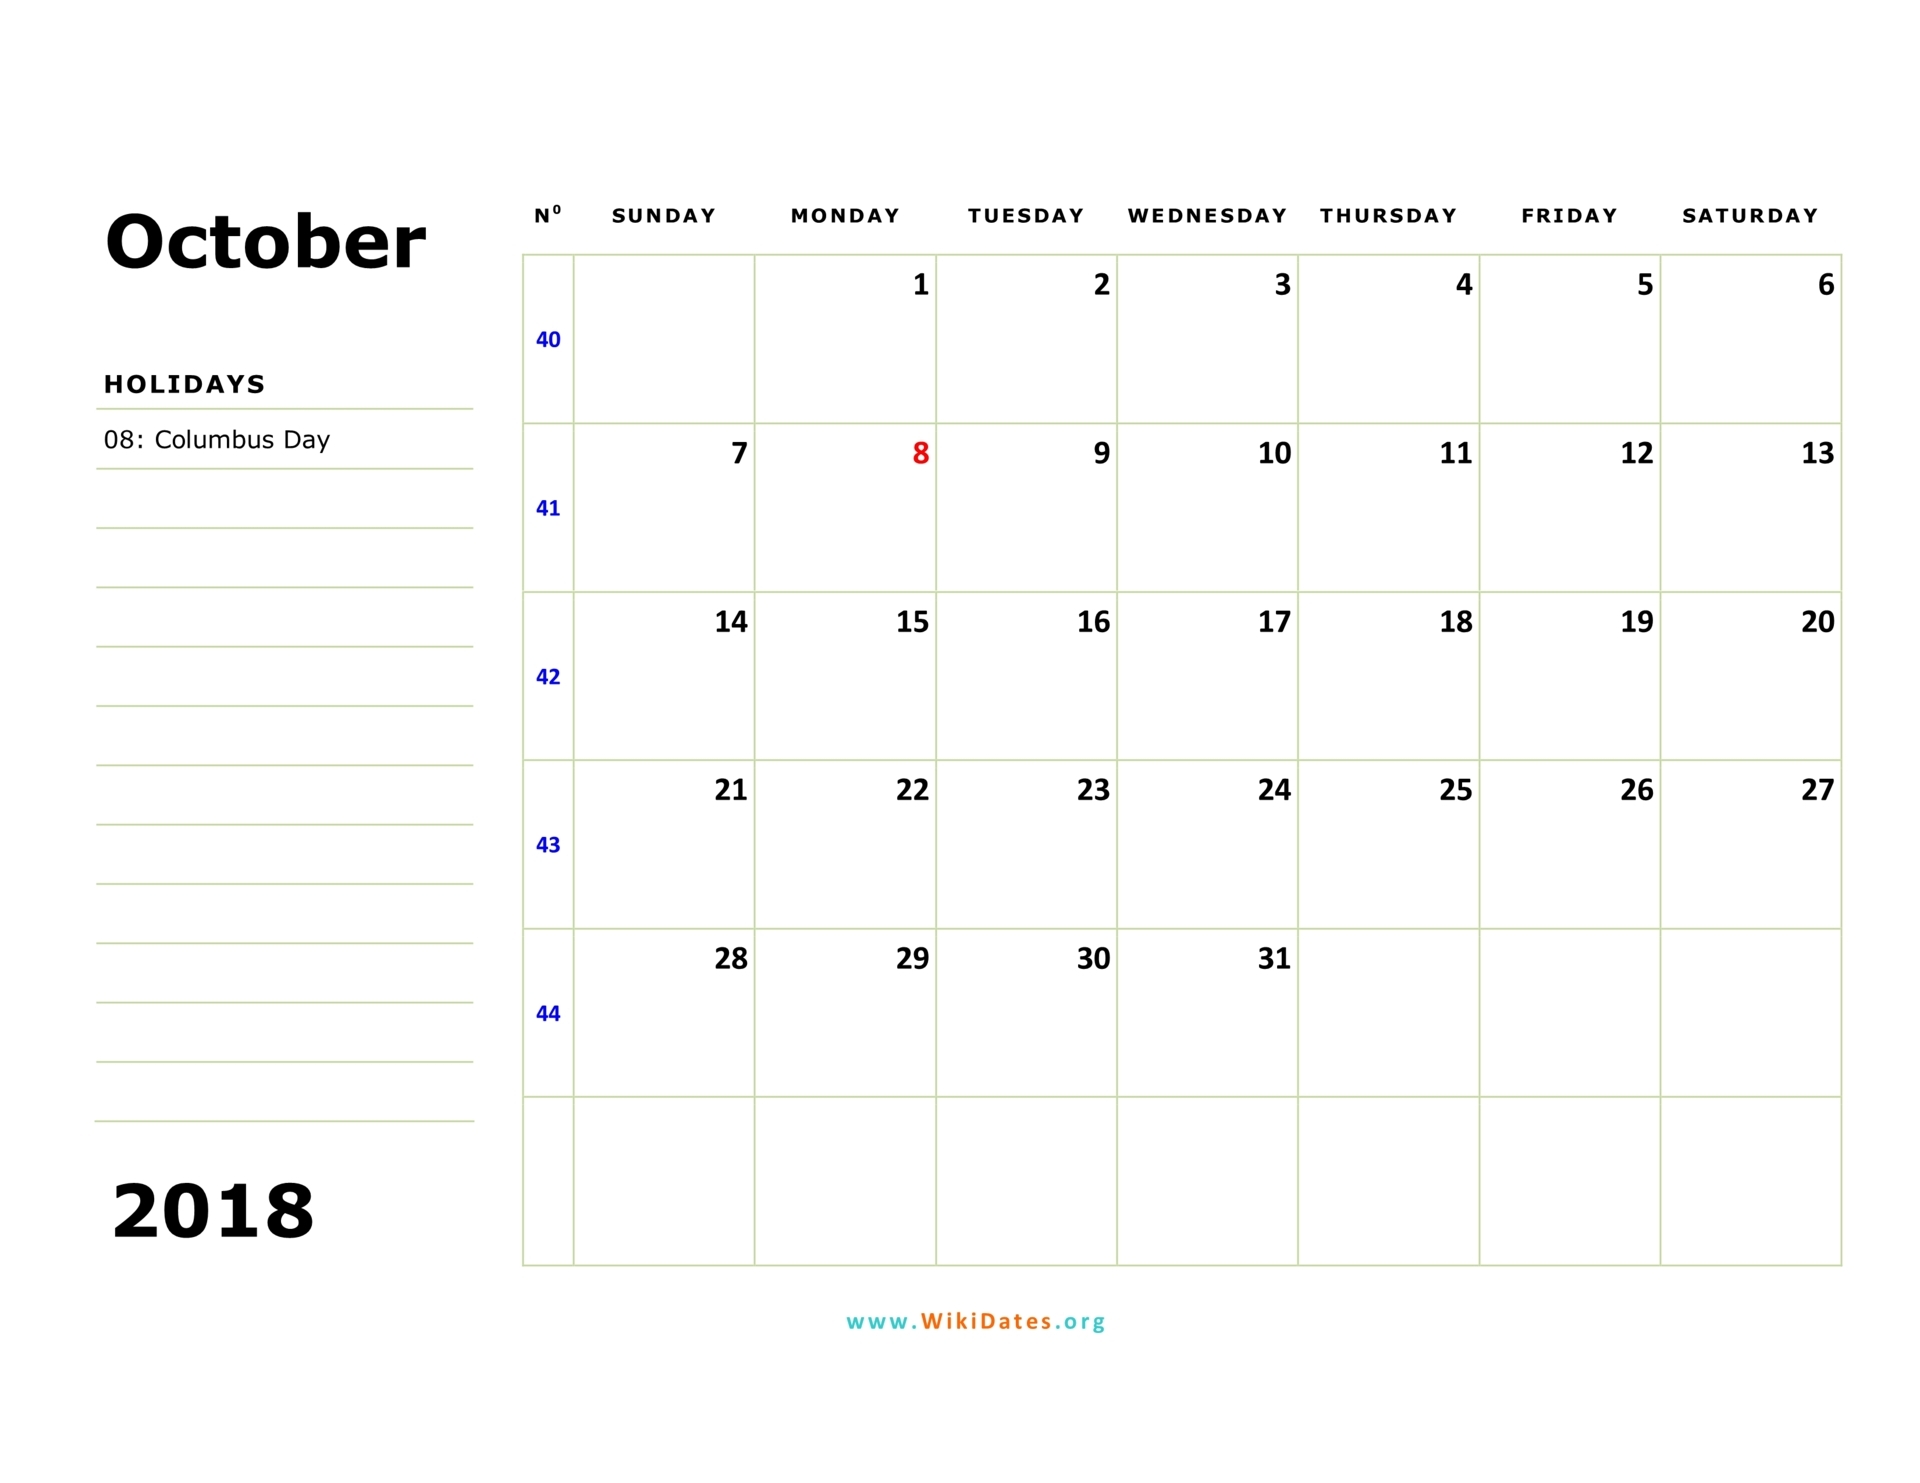 October 2018 Calendar WikiDates